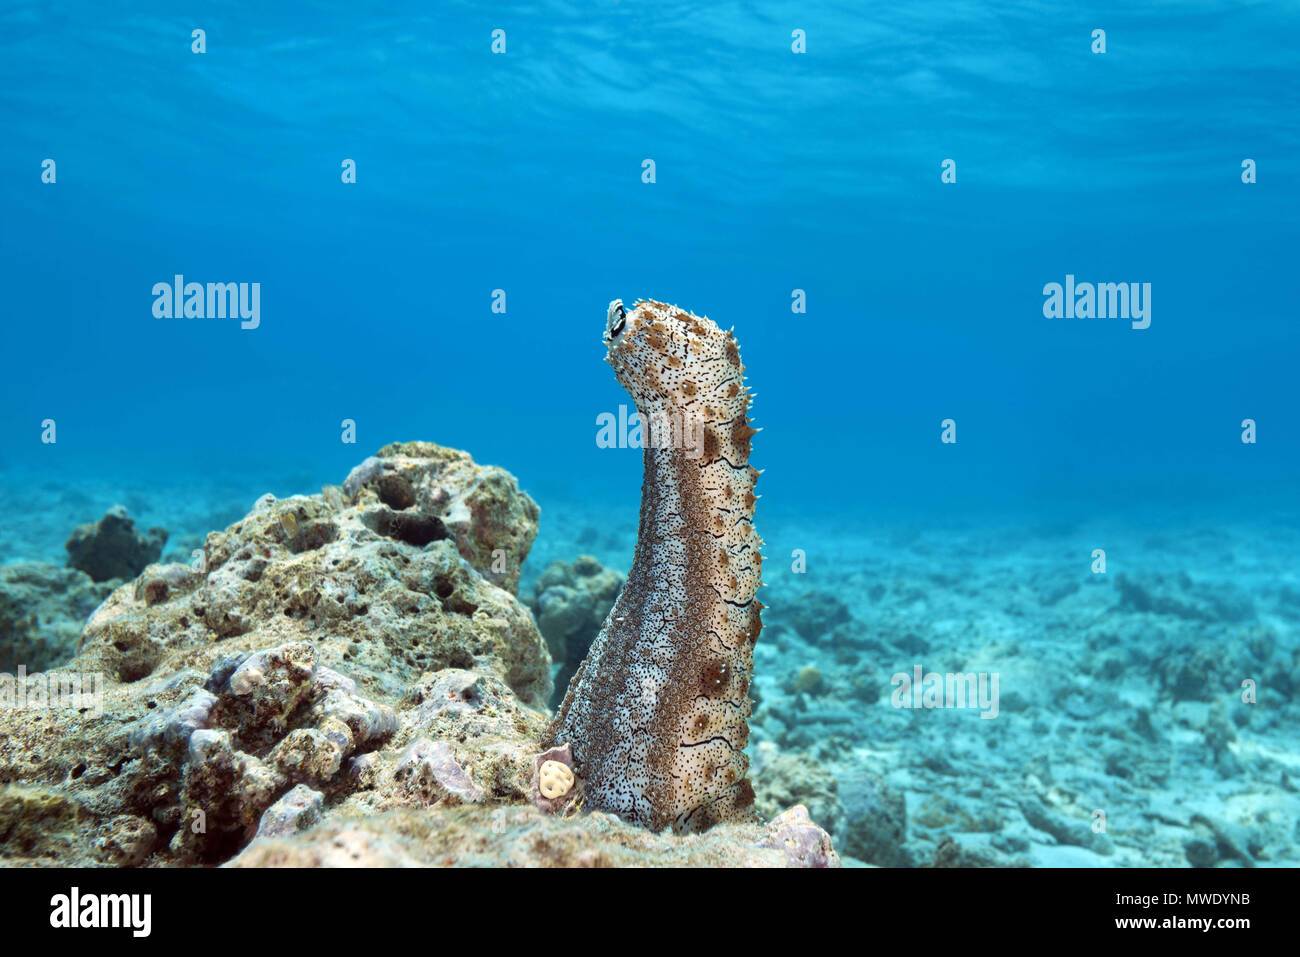 April 2, 2018 - Indo-Pacific Ocean, Maldives - Graeffe's Sea Cucumber (Pearsonothuria graeffei) stands upright on a coral reef Credit: Andrey Nekrasov/ZUMA Wire/ZUMAPRESS.com/Alamy Live News Stock Photo